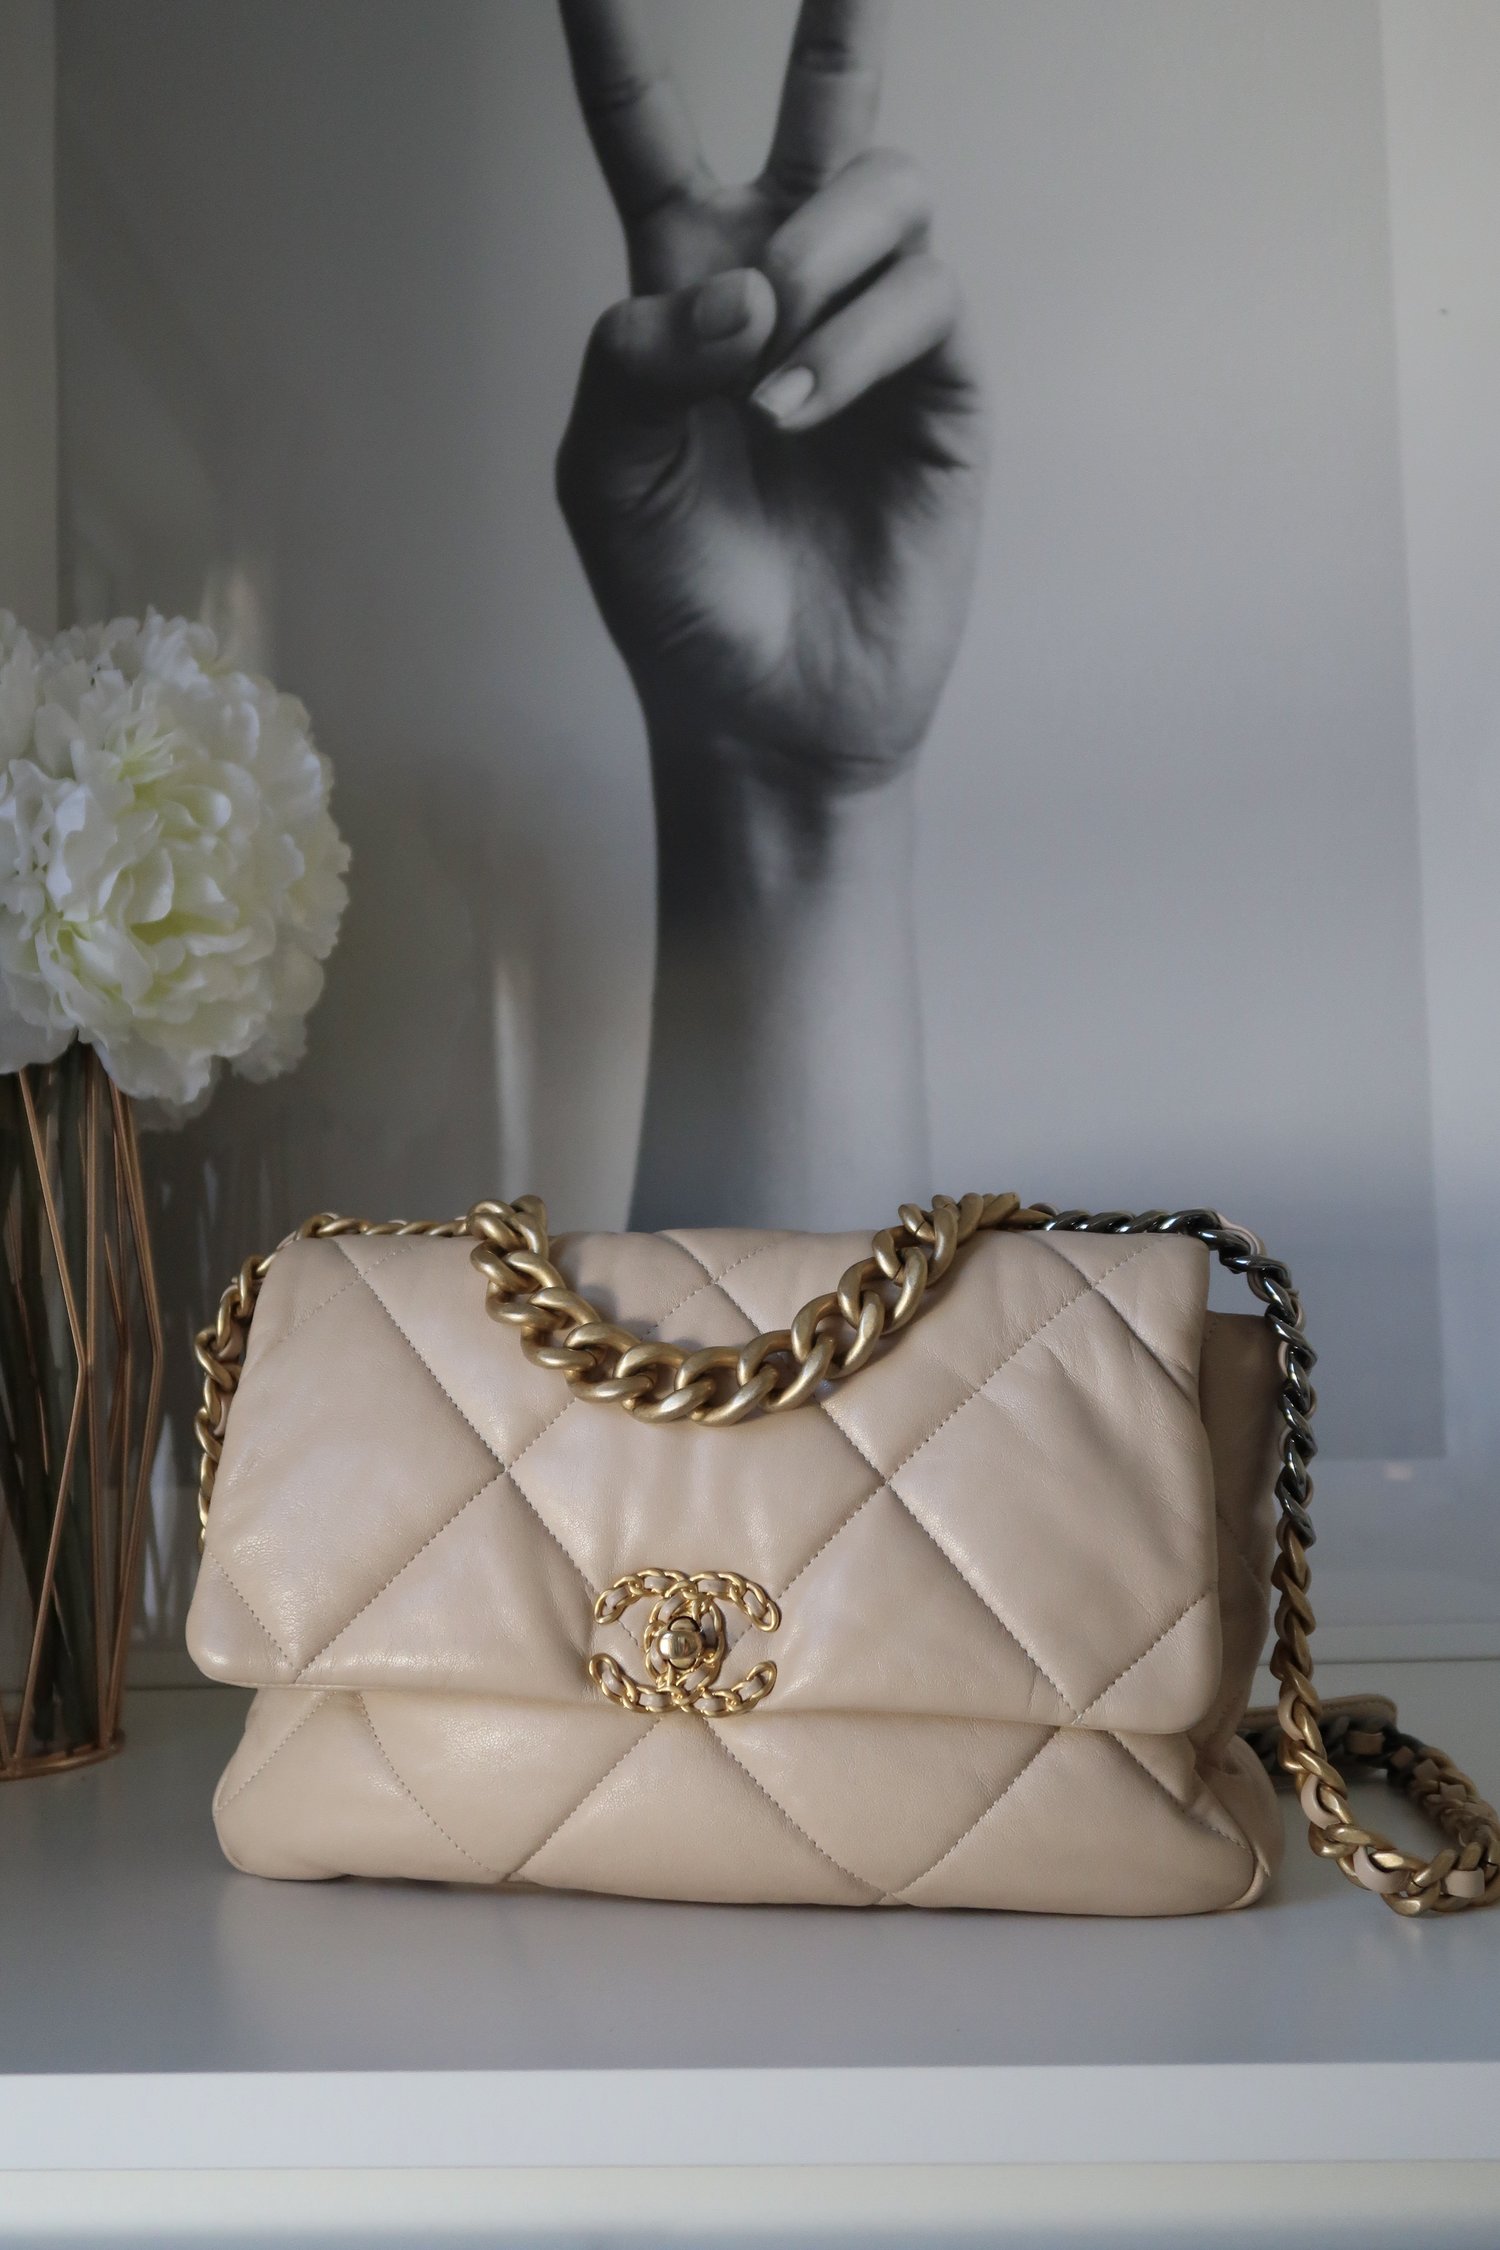 Chanel - Chanel 19 Flap Bag - Maxi - Beige Lambskin - Mixed Hardware - Pre  Loved